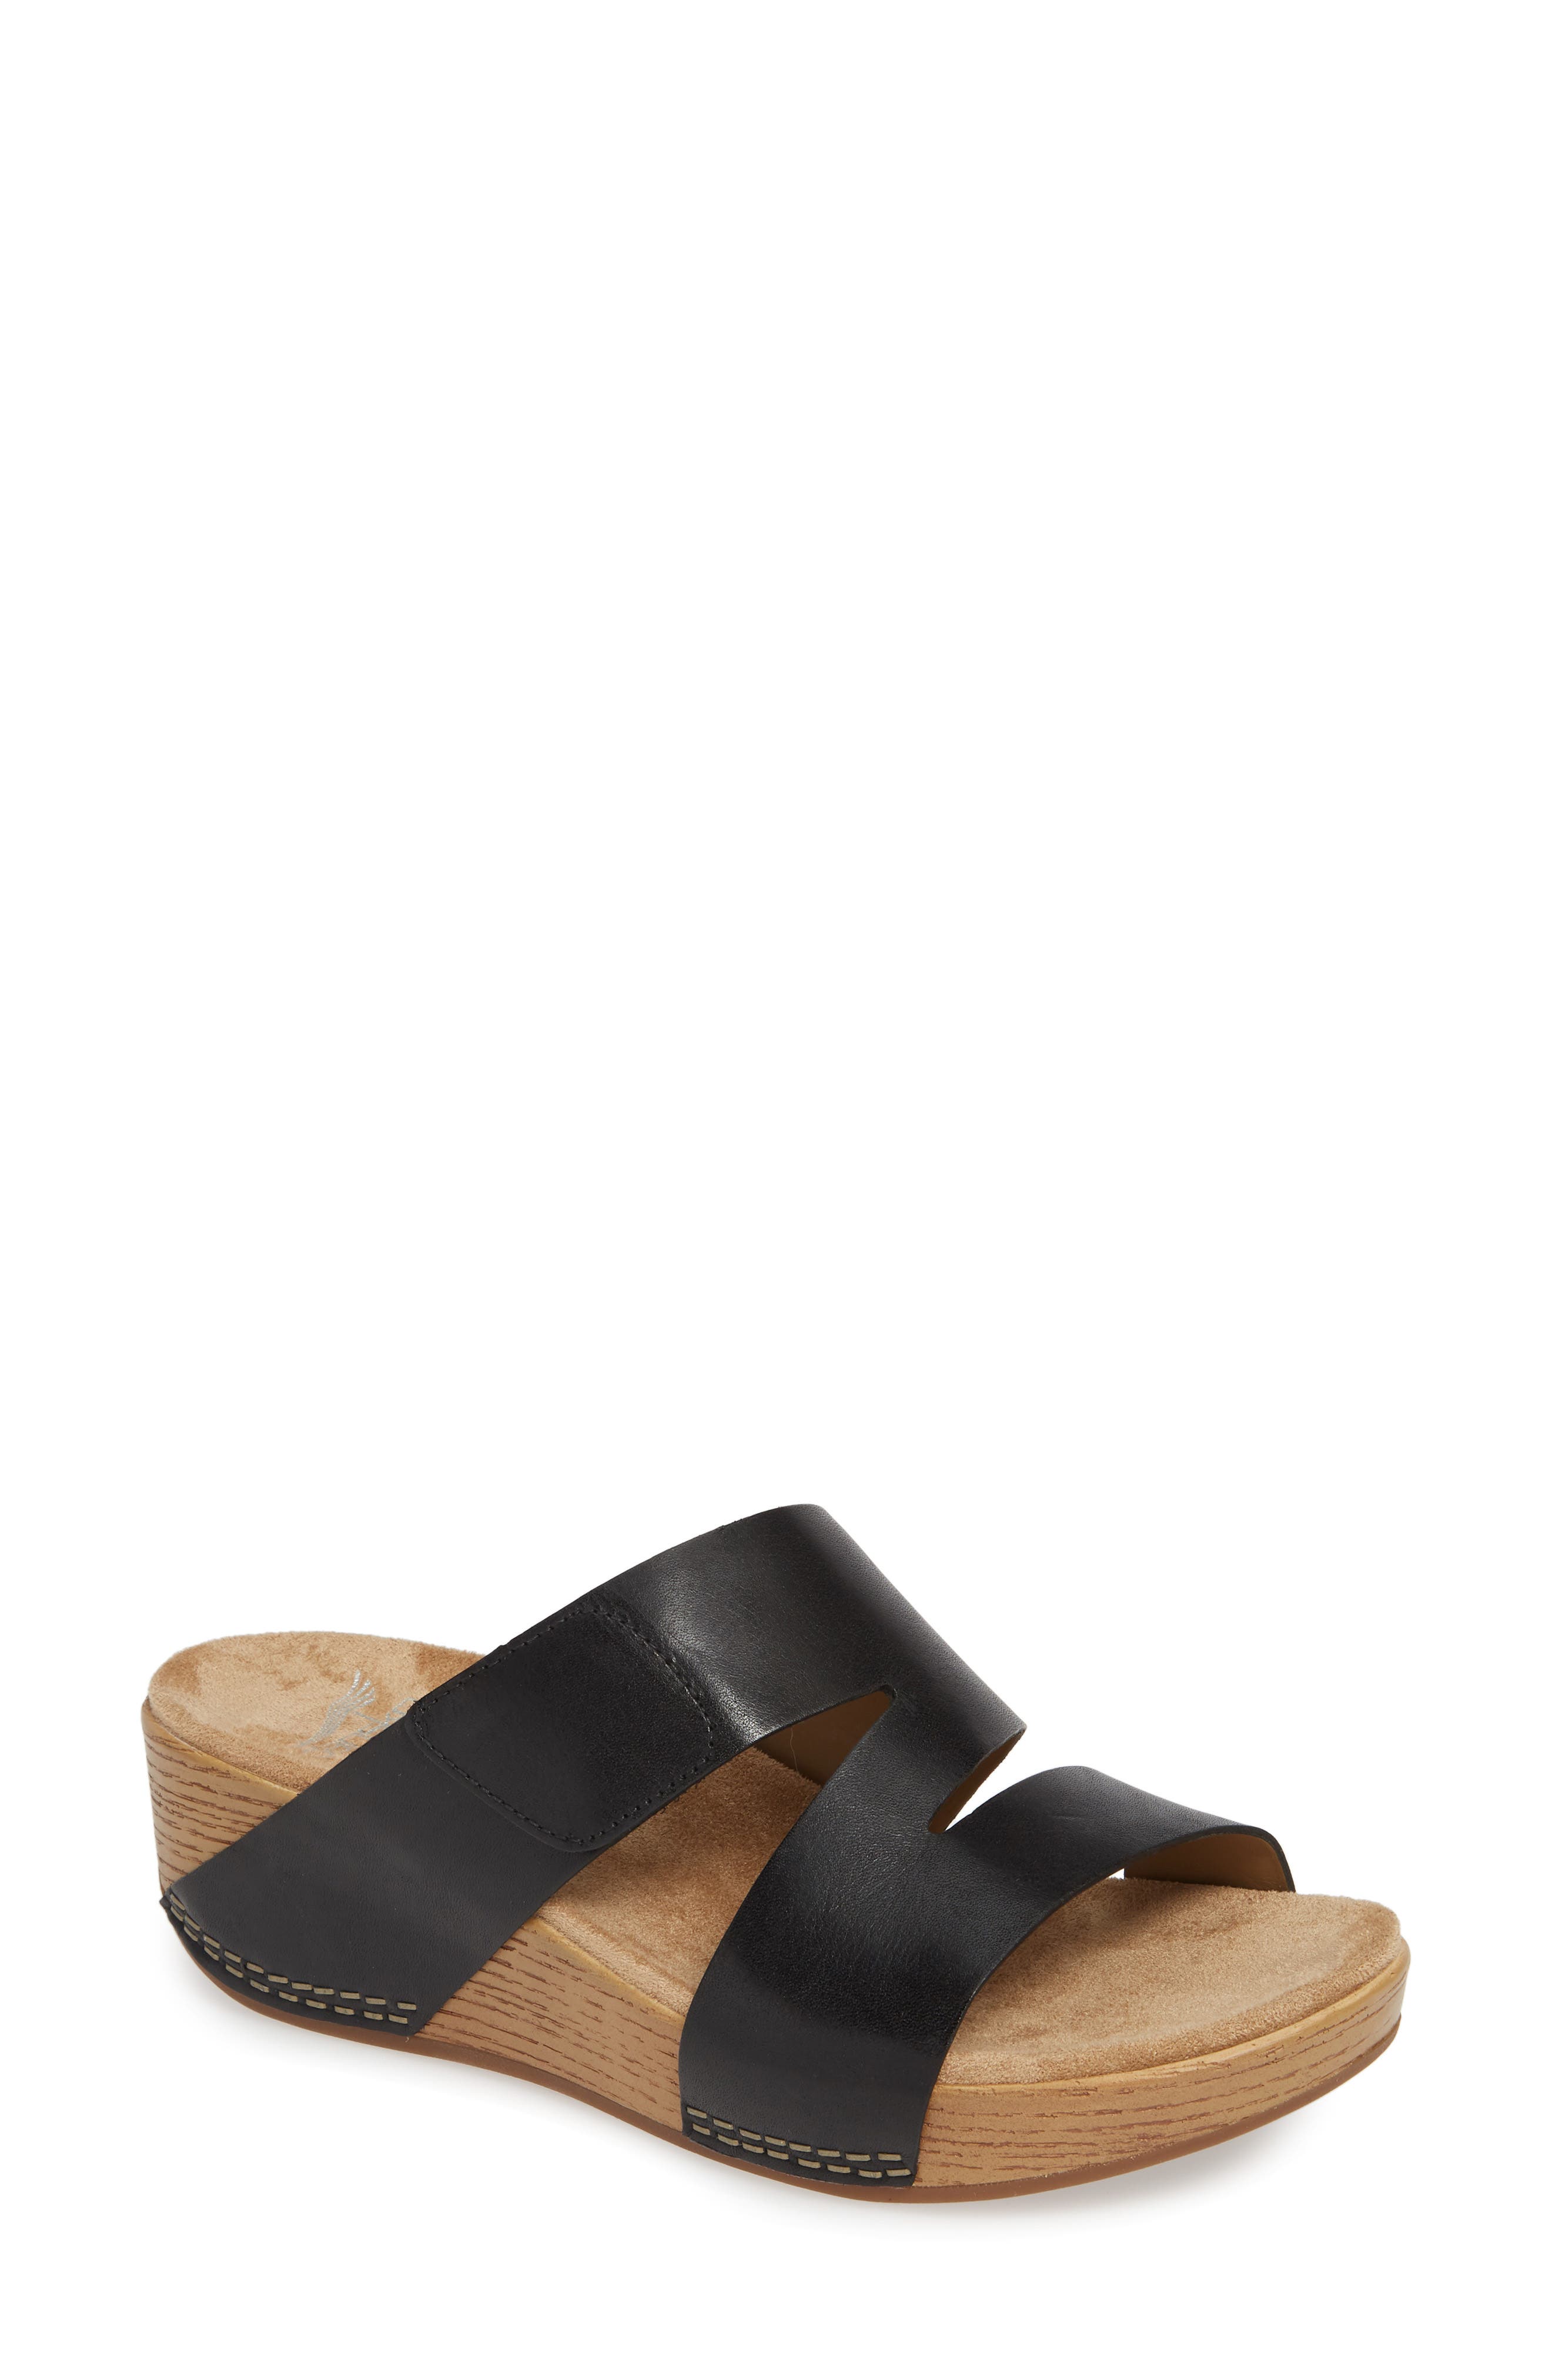 dansko lacee sandal